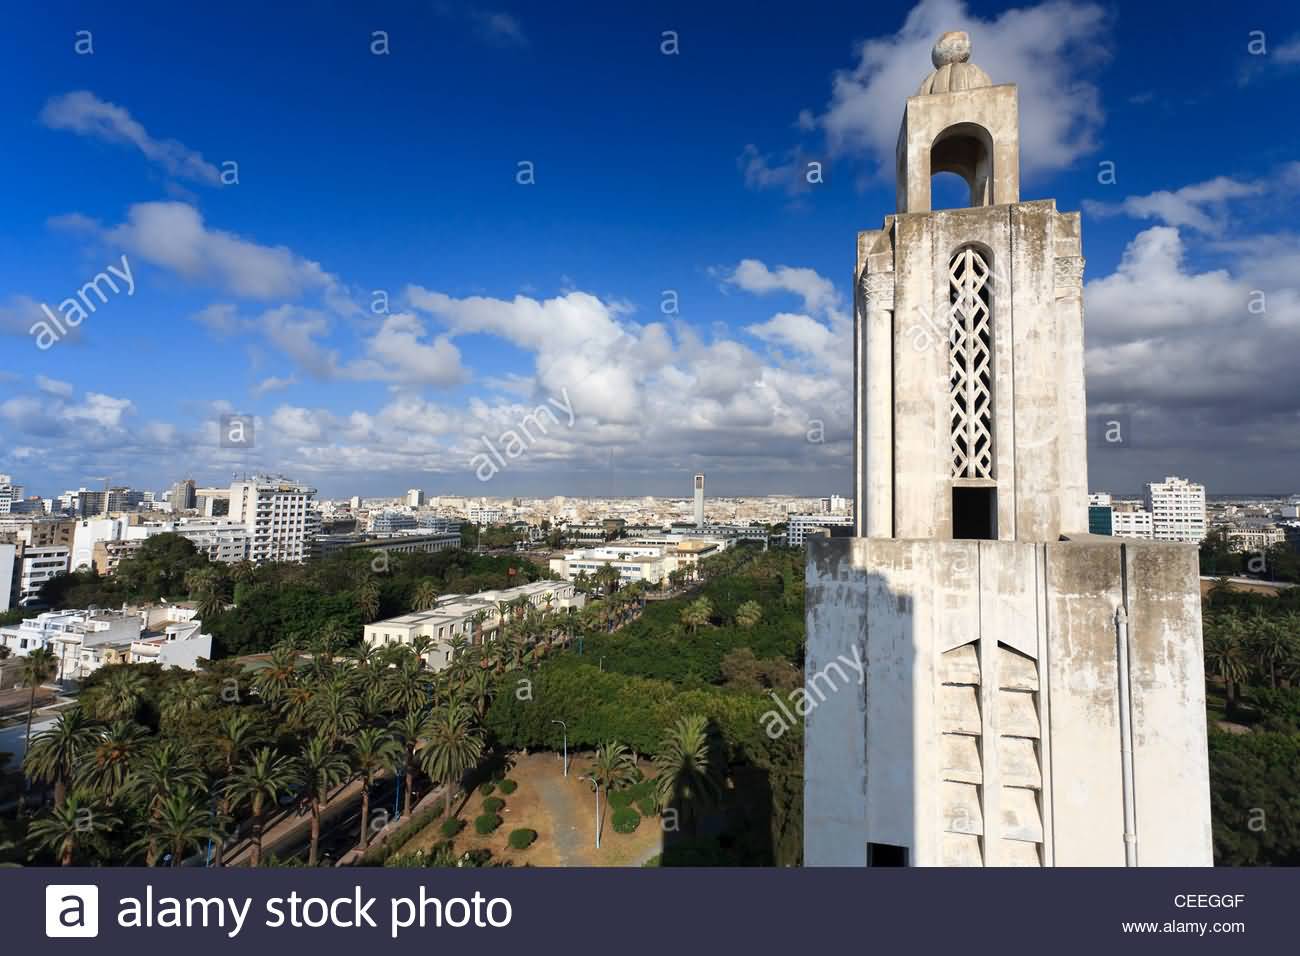 Minaret Of The Casablanca Cathedral